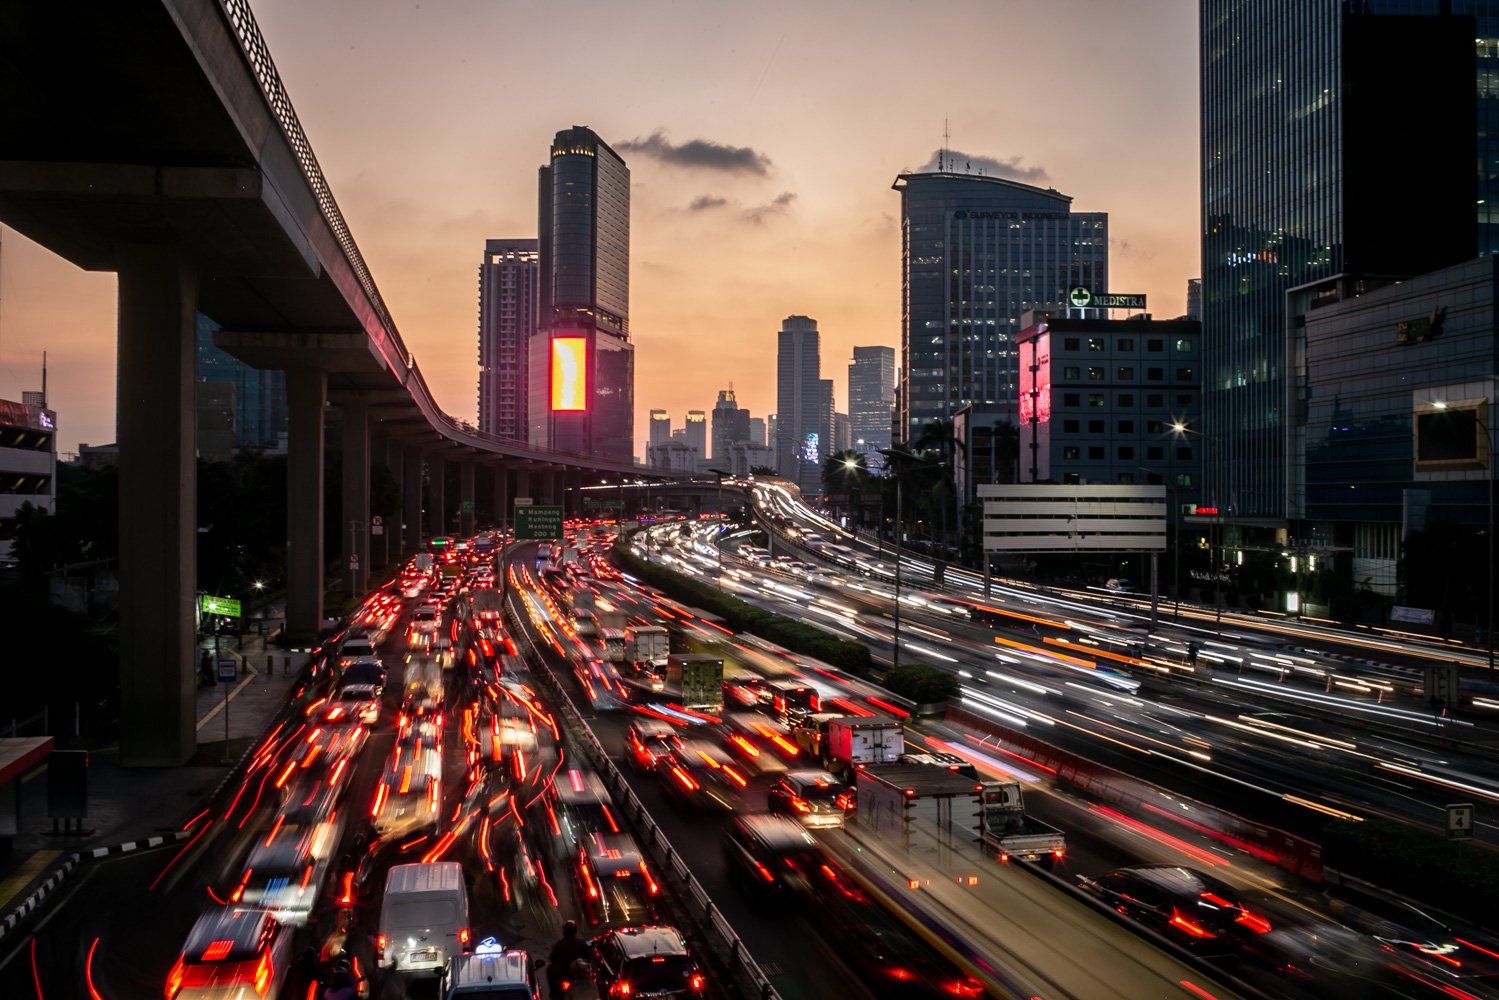 Kendaraan memadati Jalan Gatot Subroto, Jakarta, Jumat (9/6). Menurut data Badan Pusat Statistik pada 2021, terdapat 16,5 juta sepeda motor yang menjadi andalan mobilitas warga Jakarta karena dinilai praktis dan cepat. Tercatat juga ada 4,1 juta mobil penumpang, 785.000 truk, serta 342.000 bus di Ibu Kota.